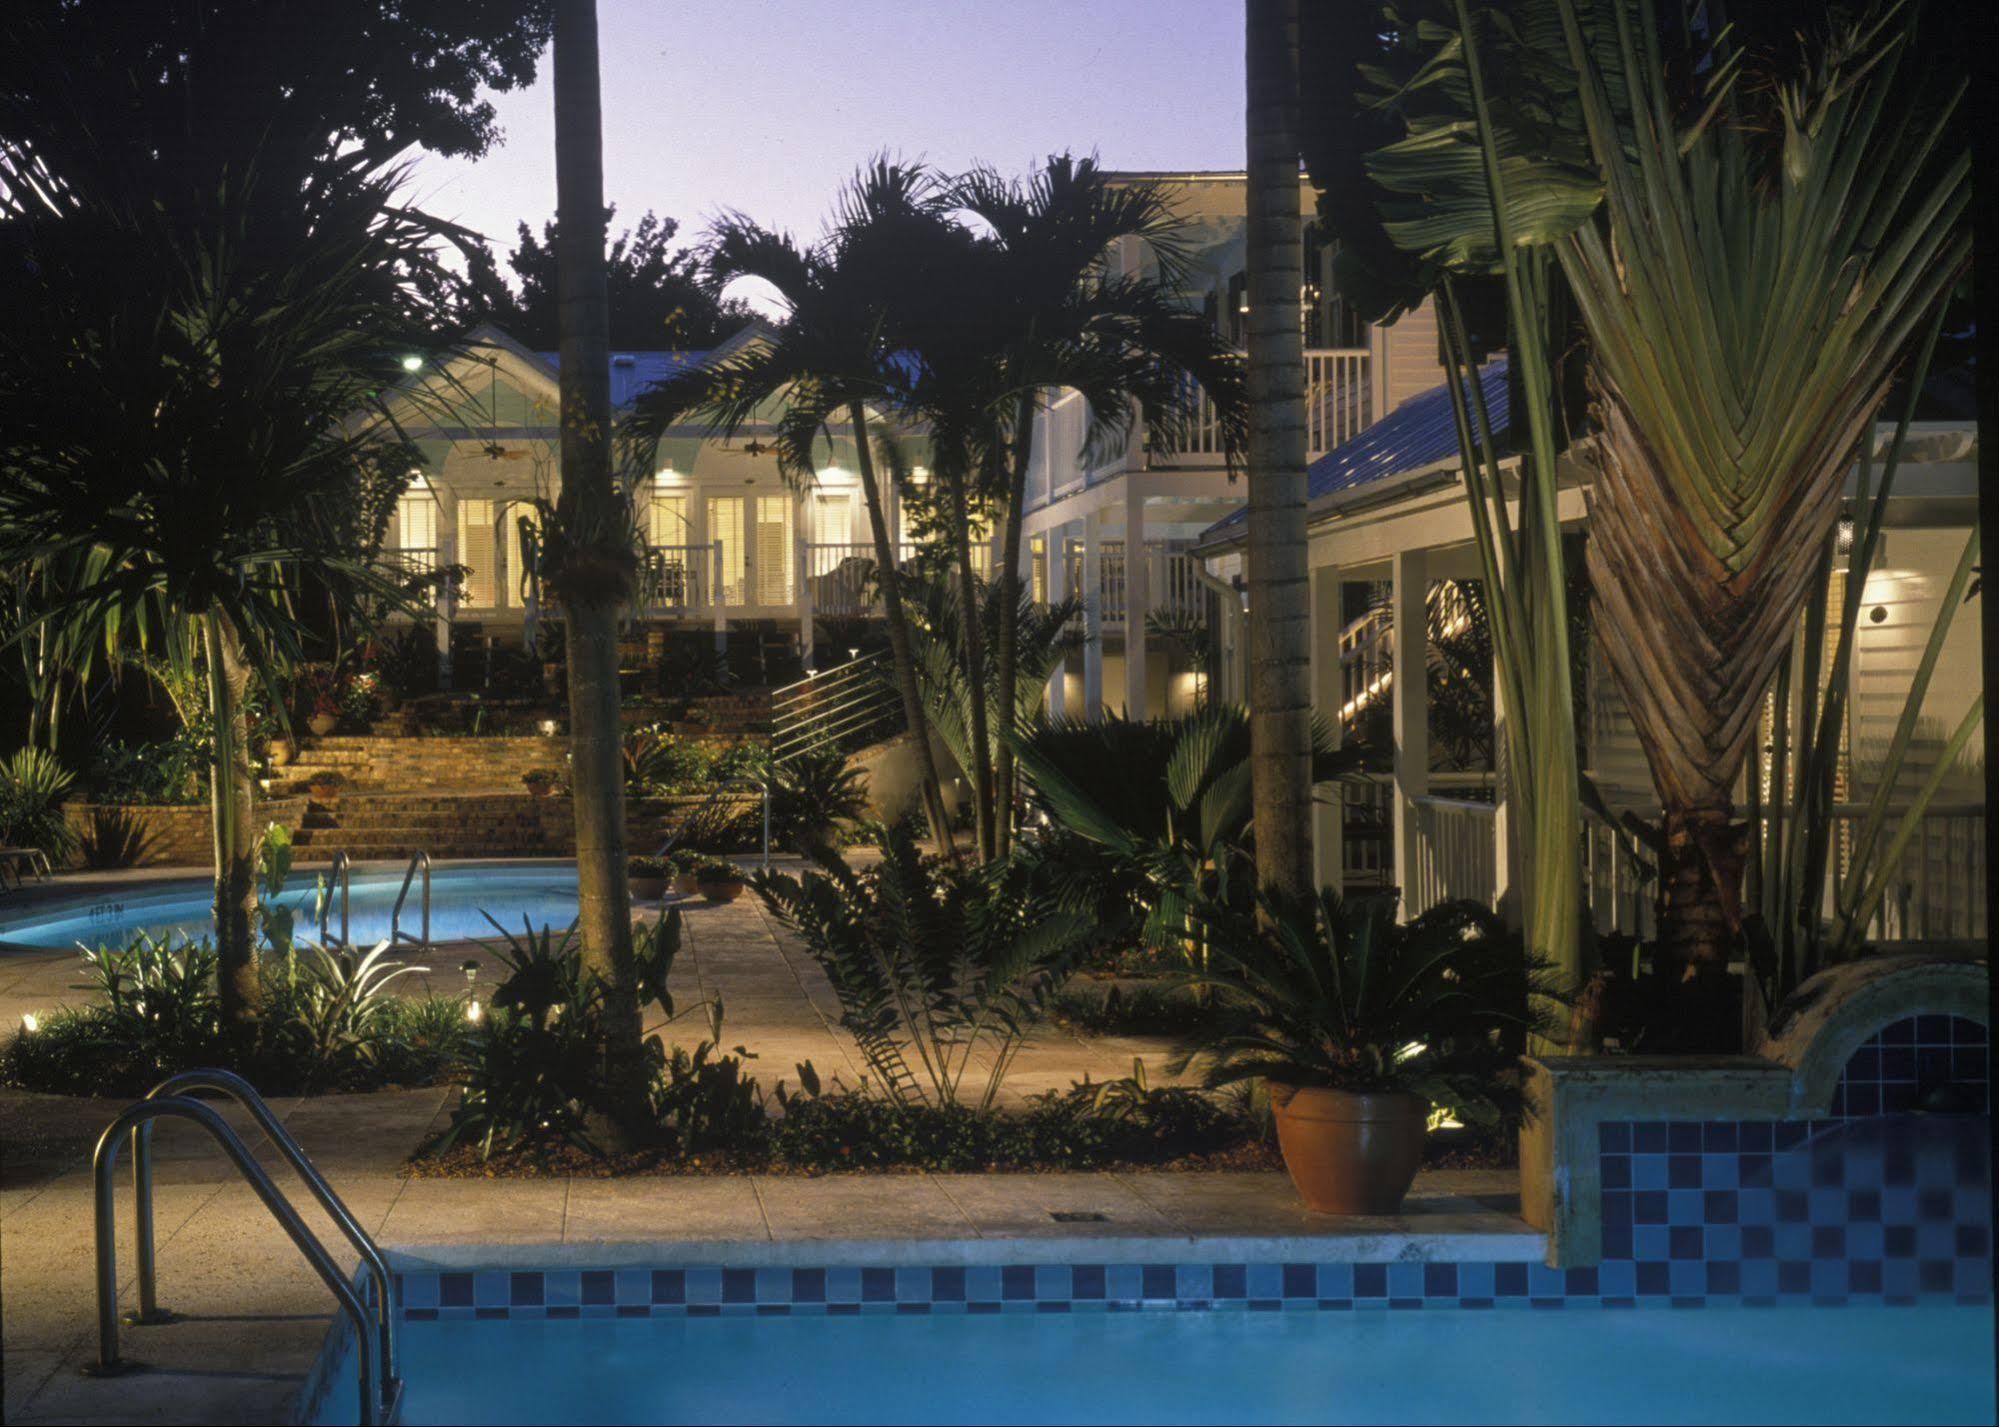 The Marquesa Hotel Key West Exterior photo